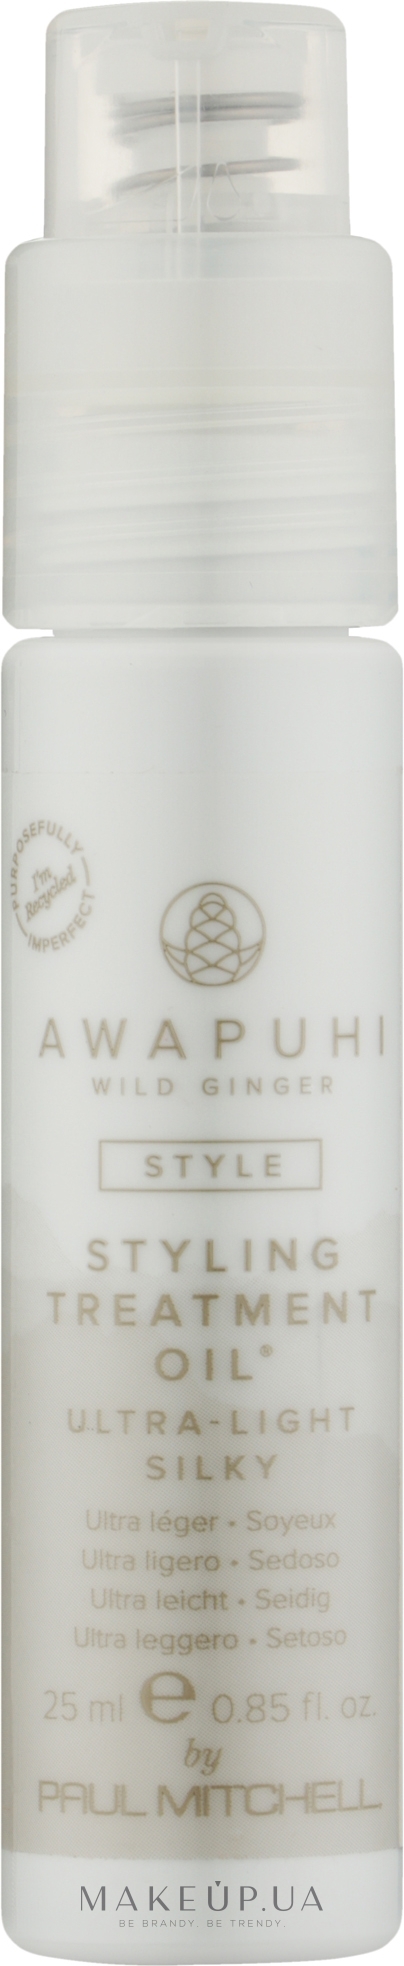 Масло для укладання і догляду за волоссям - Paul Mitchell Awapuhi Wild Ginger Styling Oil Treatment — фото 25ml